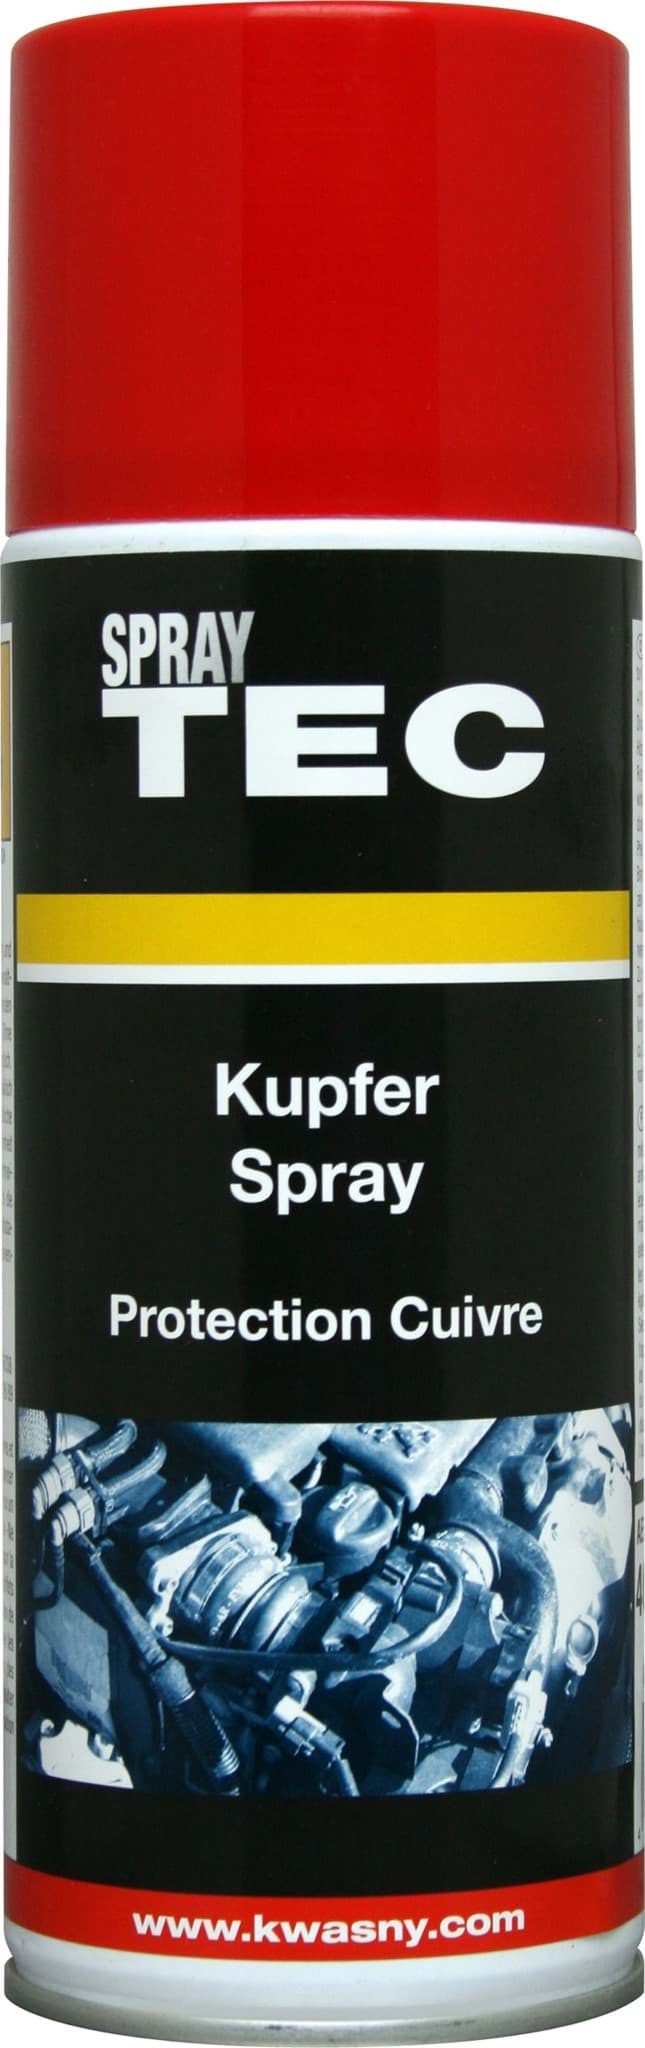 Afbeelding van SprayTec Kupfer-Spray 400ml